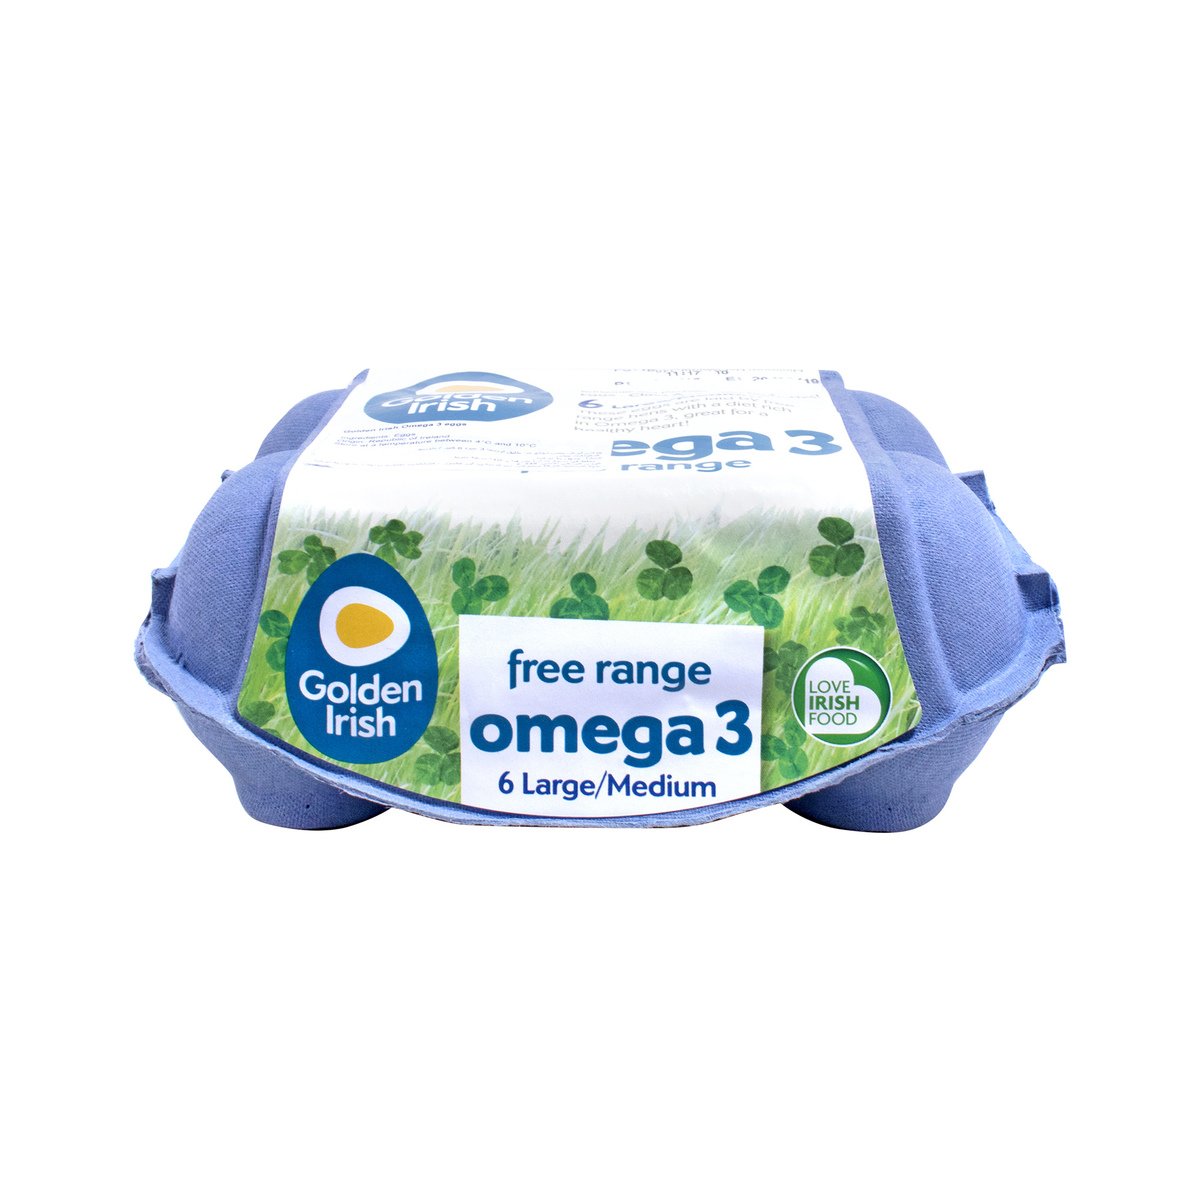 Golden Irish Omega 3 Free Range Eggs Large/Medium 6pcs